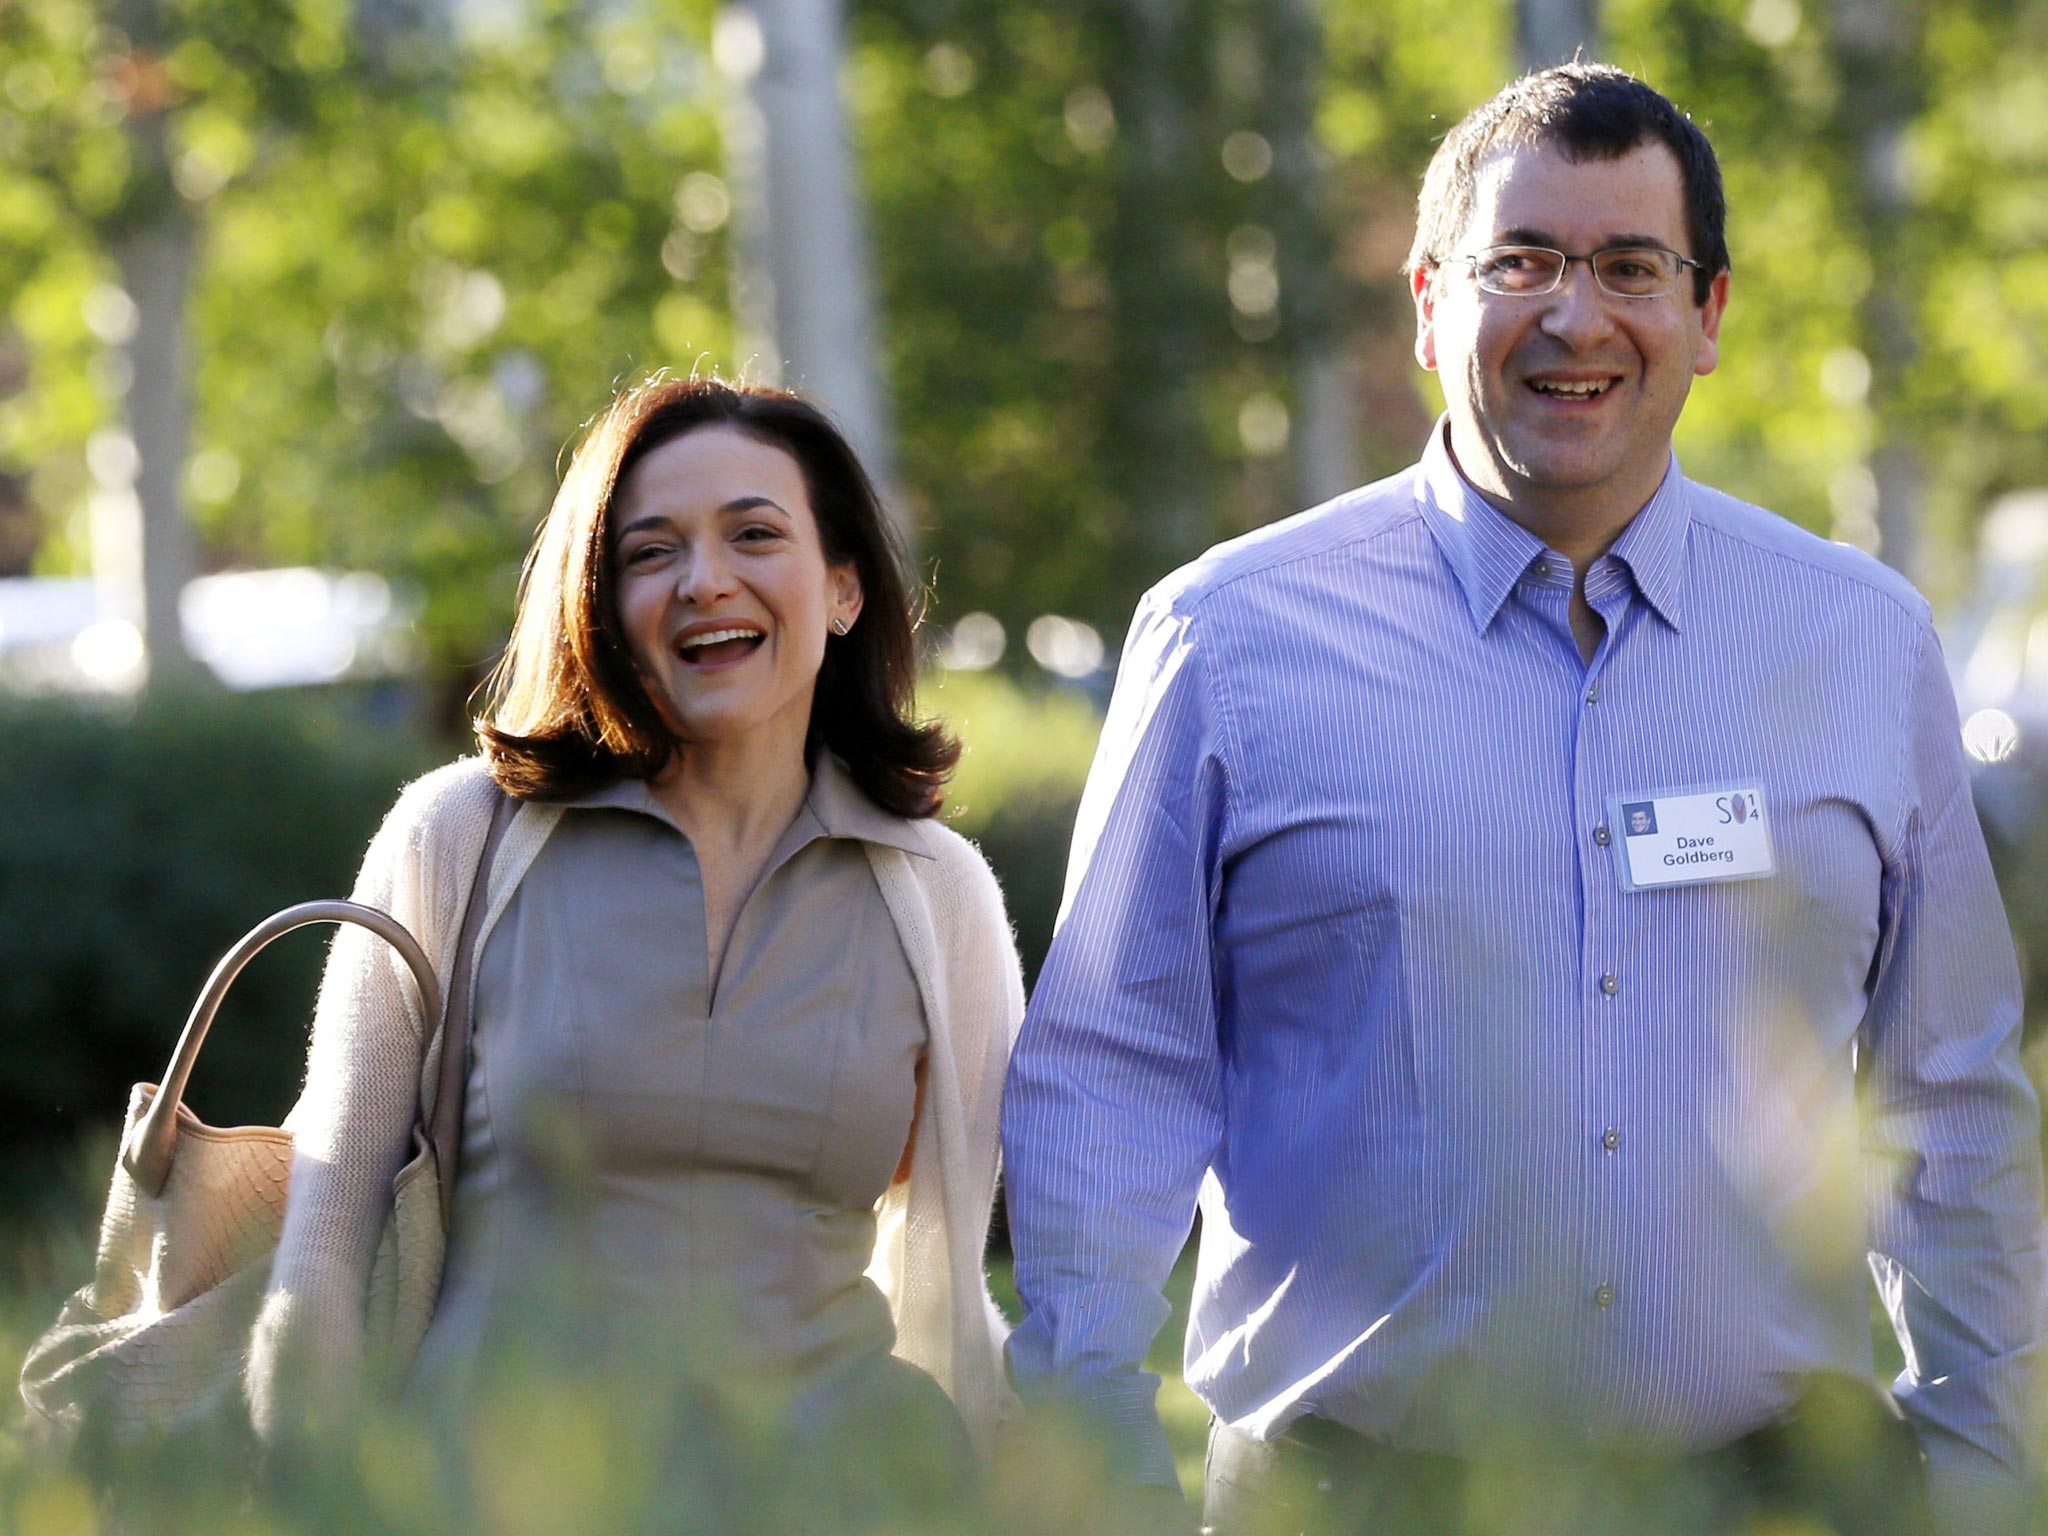 Sheryl Sandberg, Chief Operating Officer (COO) of Facebook, with her husband David Goldberg, CEO of SurveyMonkey